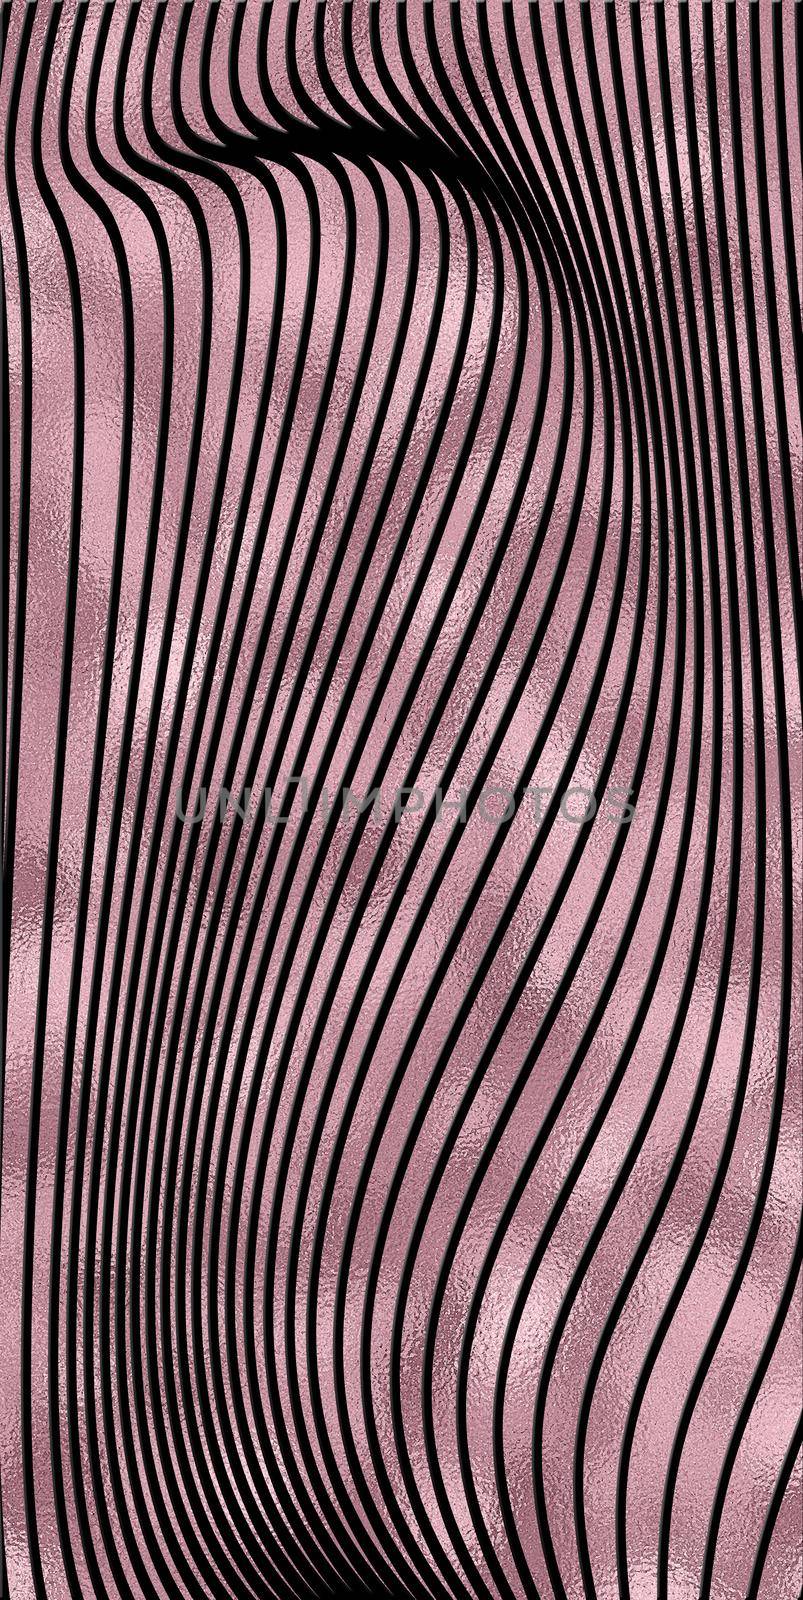 Abstract linear pattern. by NelliPolk